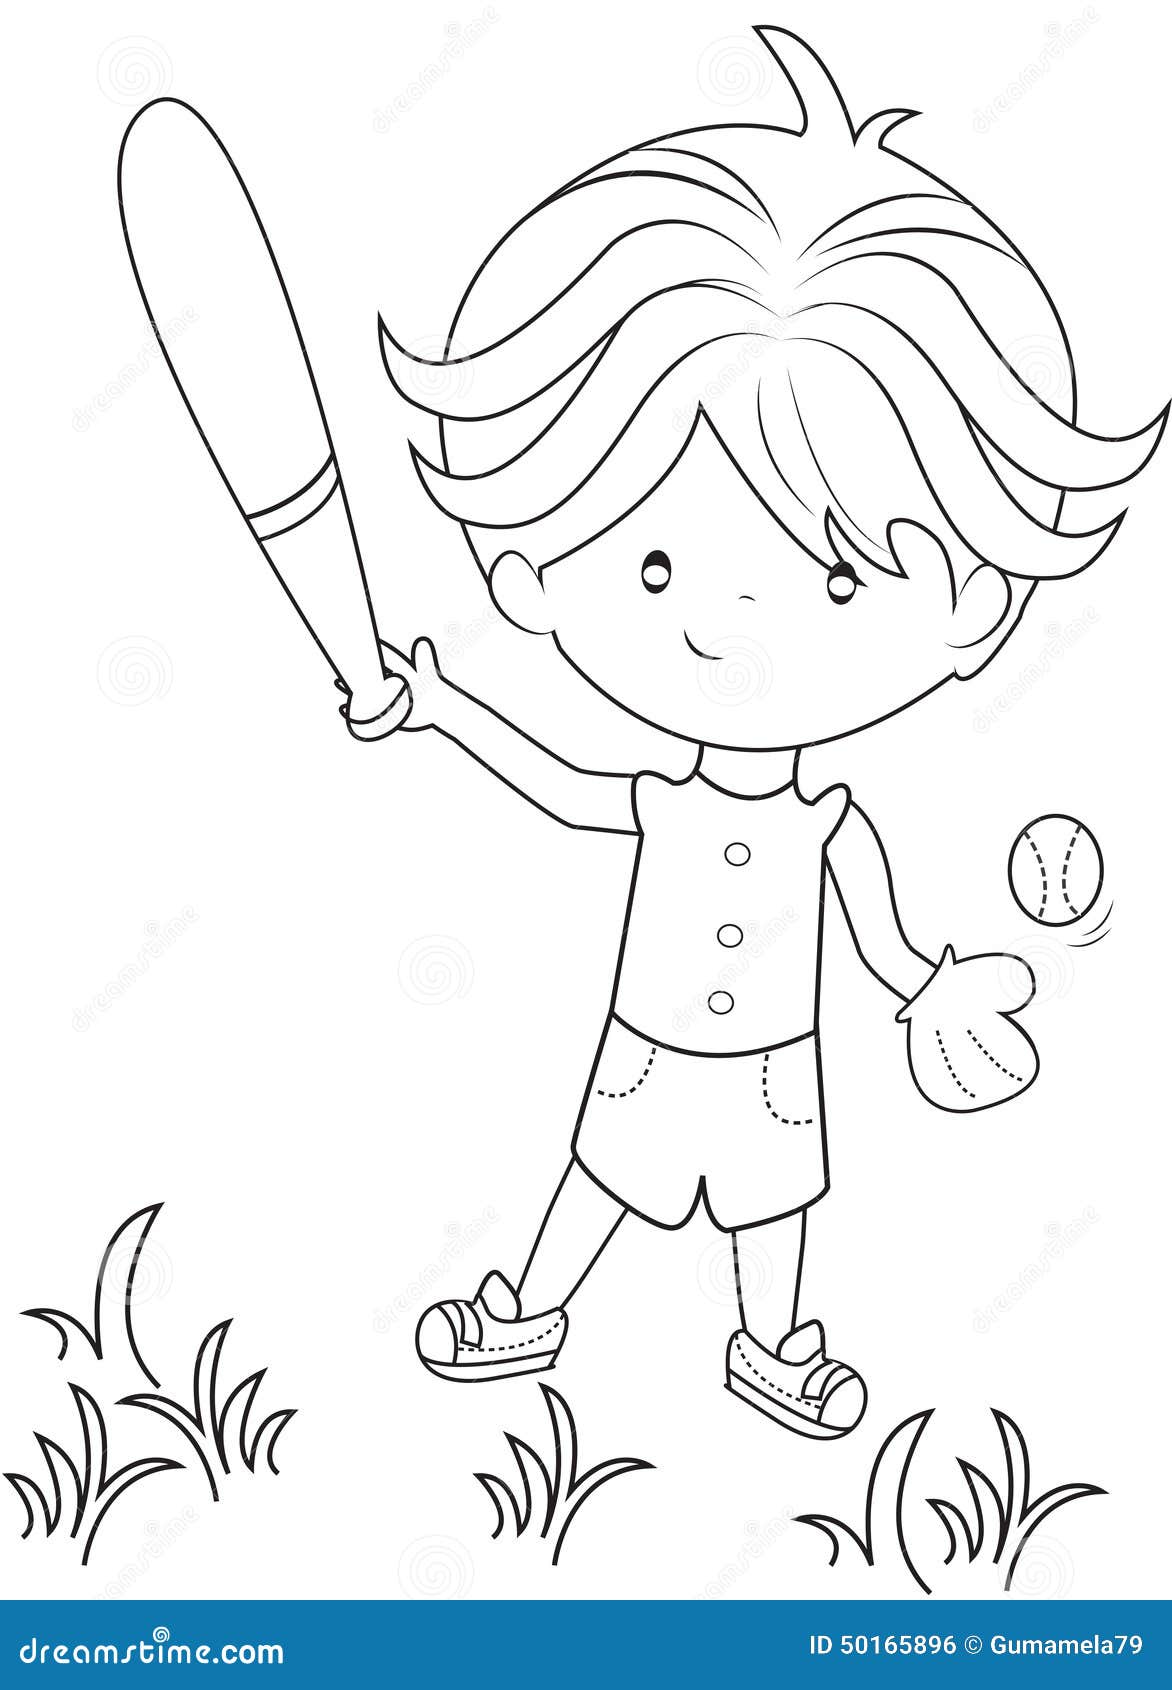 Boy Playing Baseball Coloring Page Stock Illustration - Image: 50165896